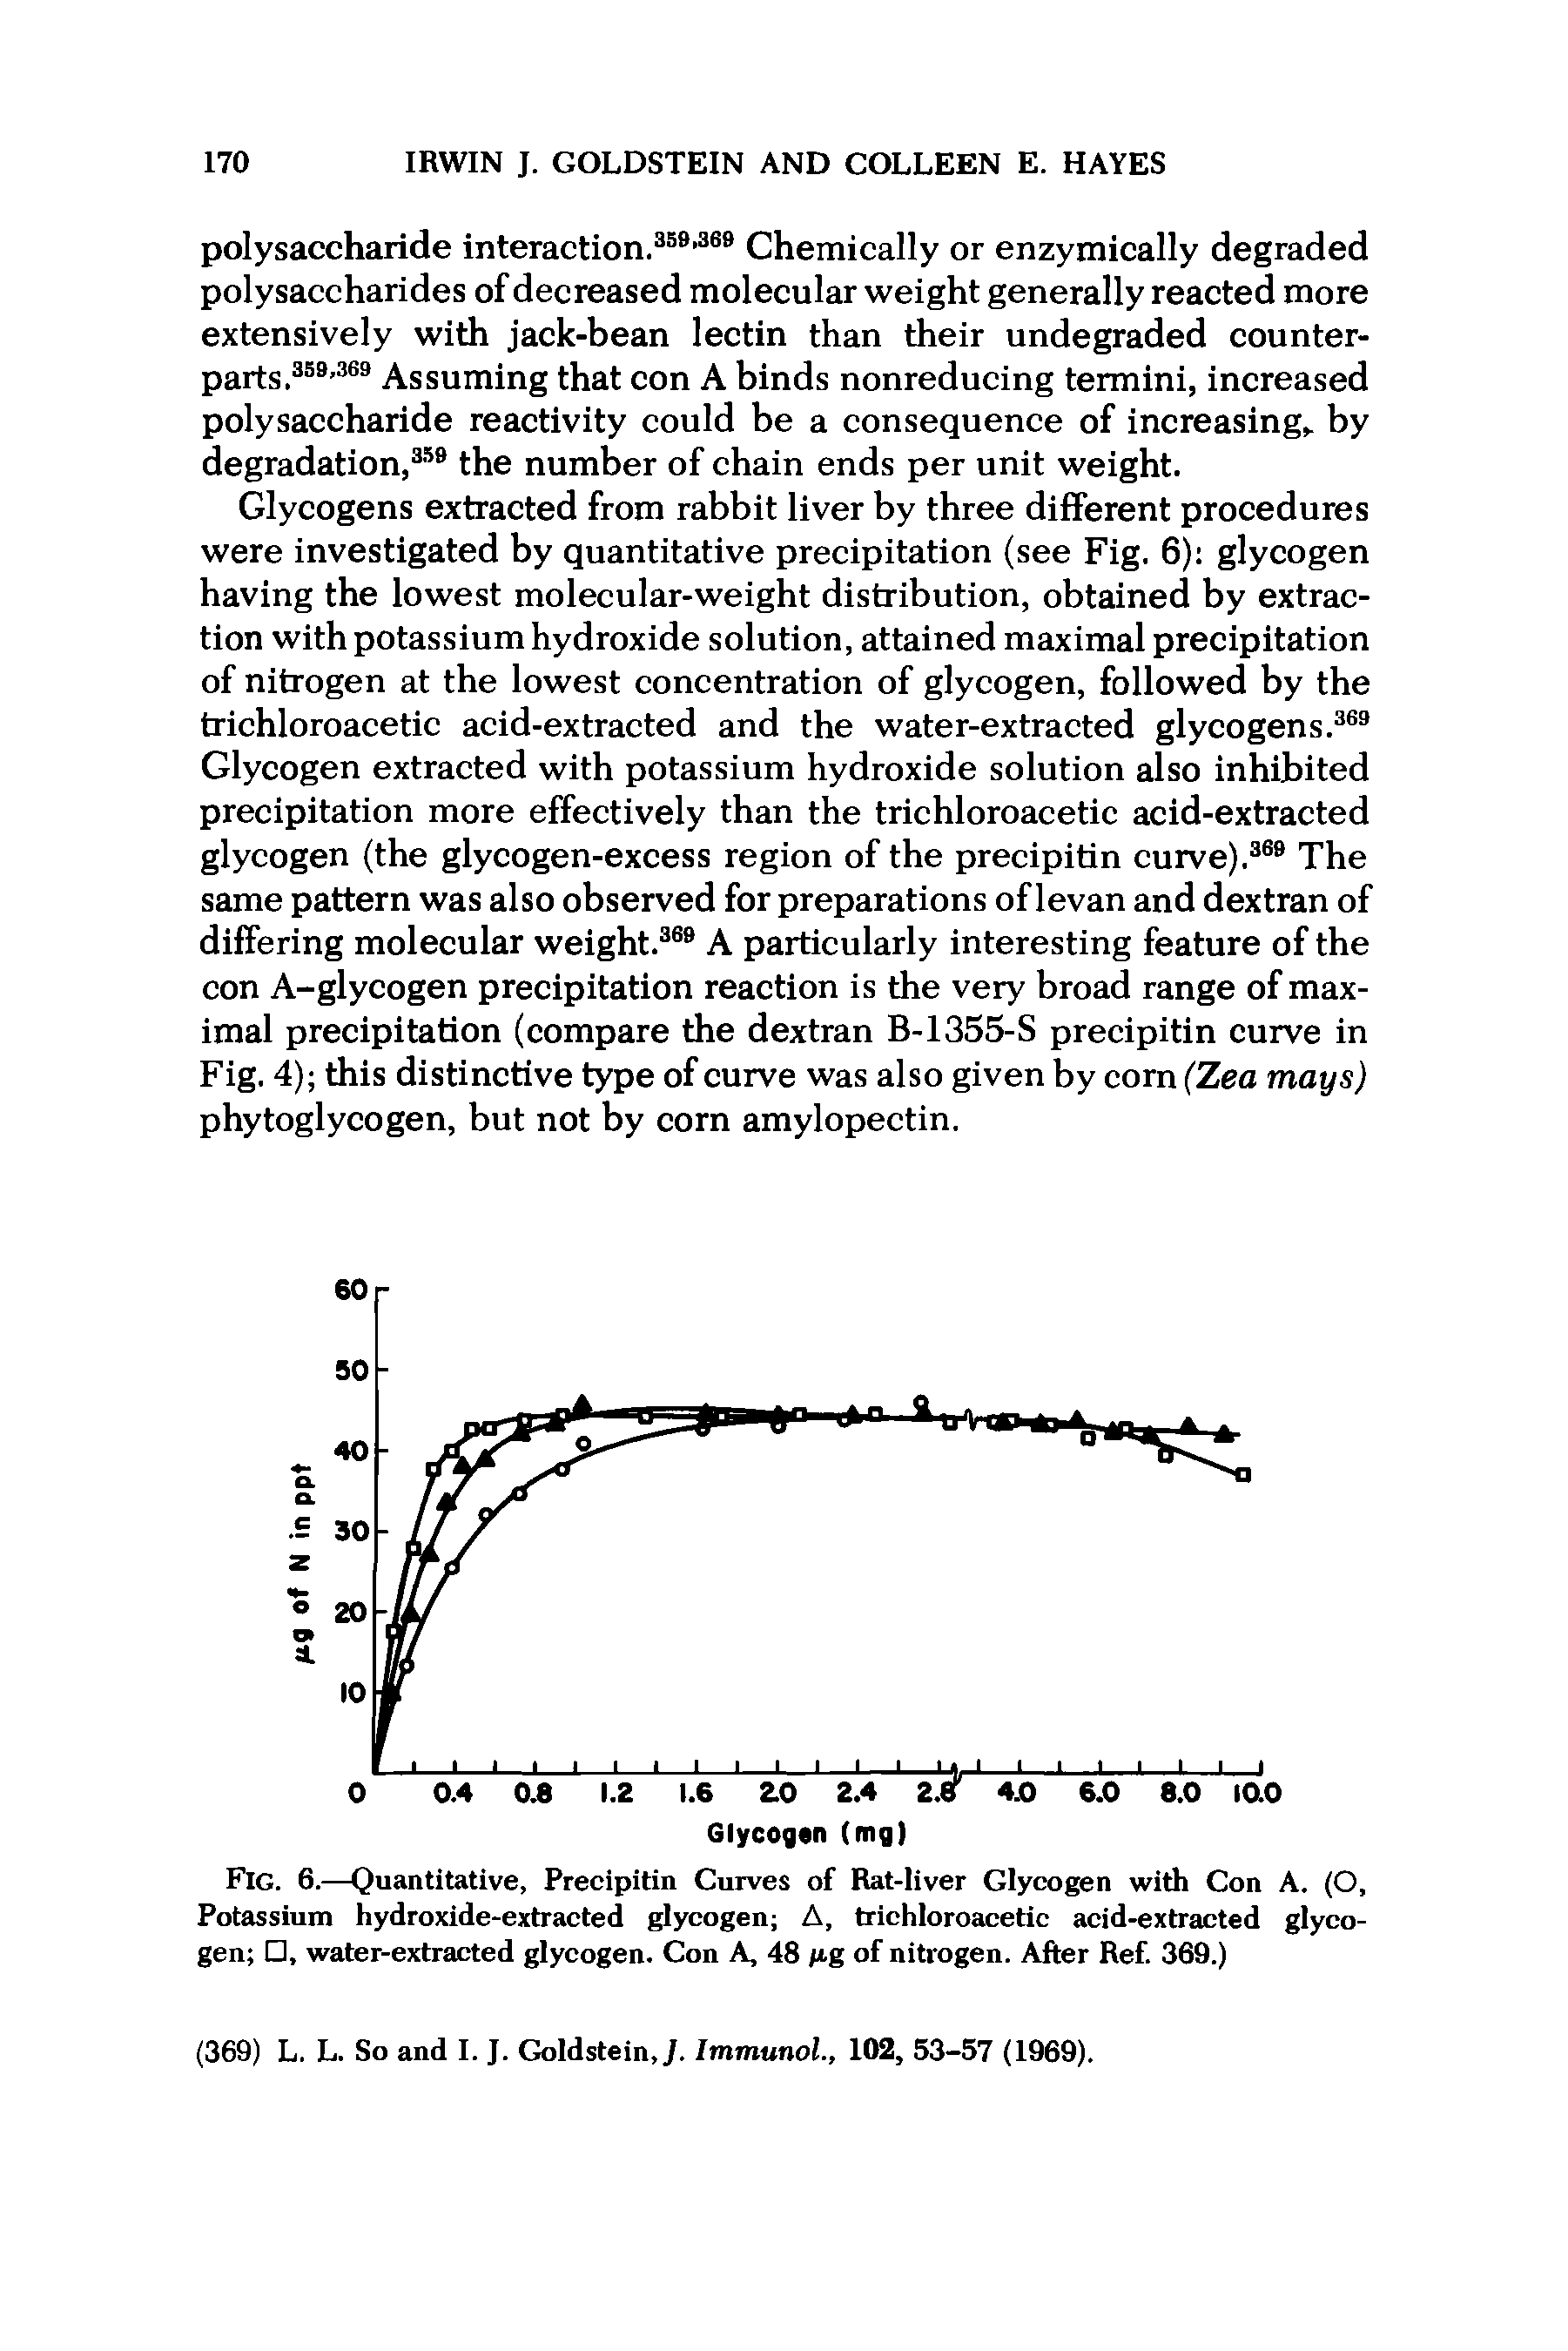 Fig. 6.—Quantitative, Precipitin Curves of Rat-liver Glycogen with Con A. (O, Potassium hydroxide-extracted glycogen A, trichloroacetic acid-extracted glycogen , water-extracted glycogen. Con A, 48 /xg of nitrogen. After Ref. 369.)...